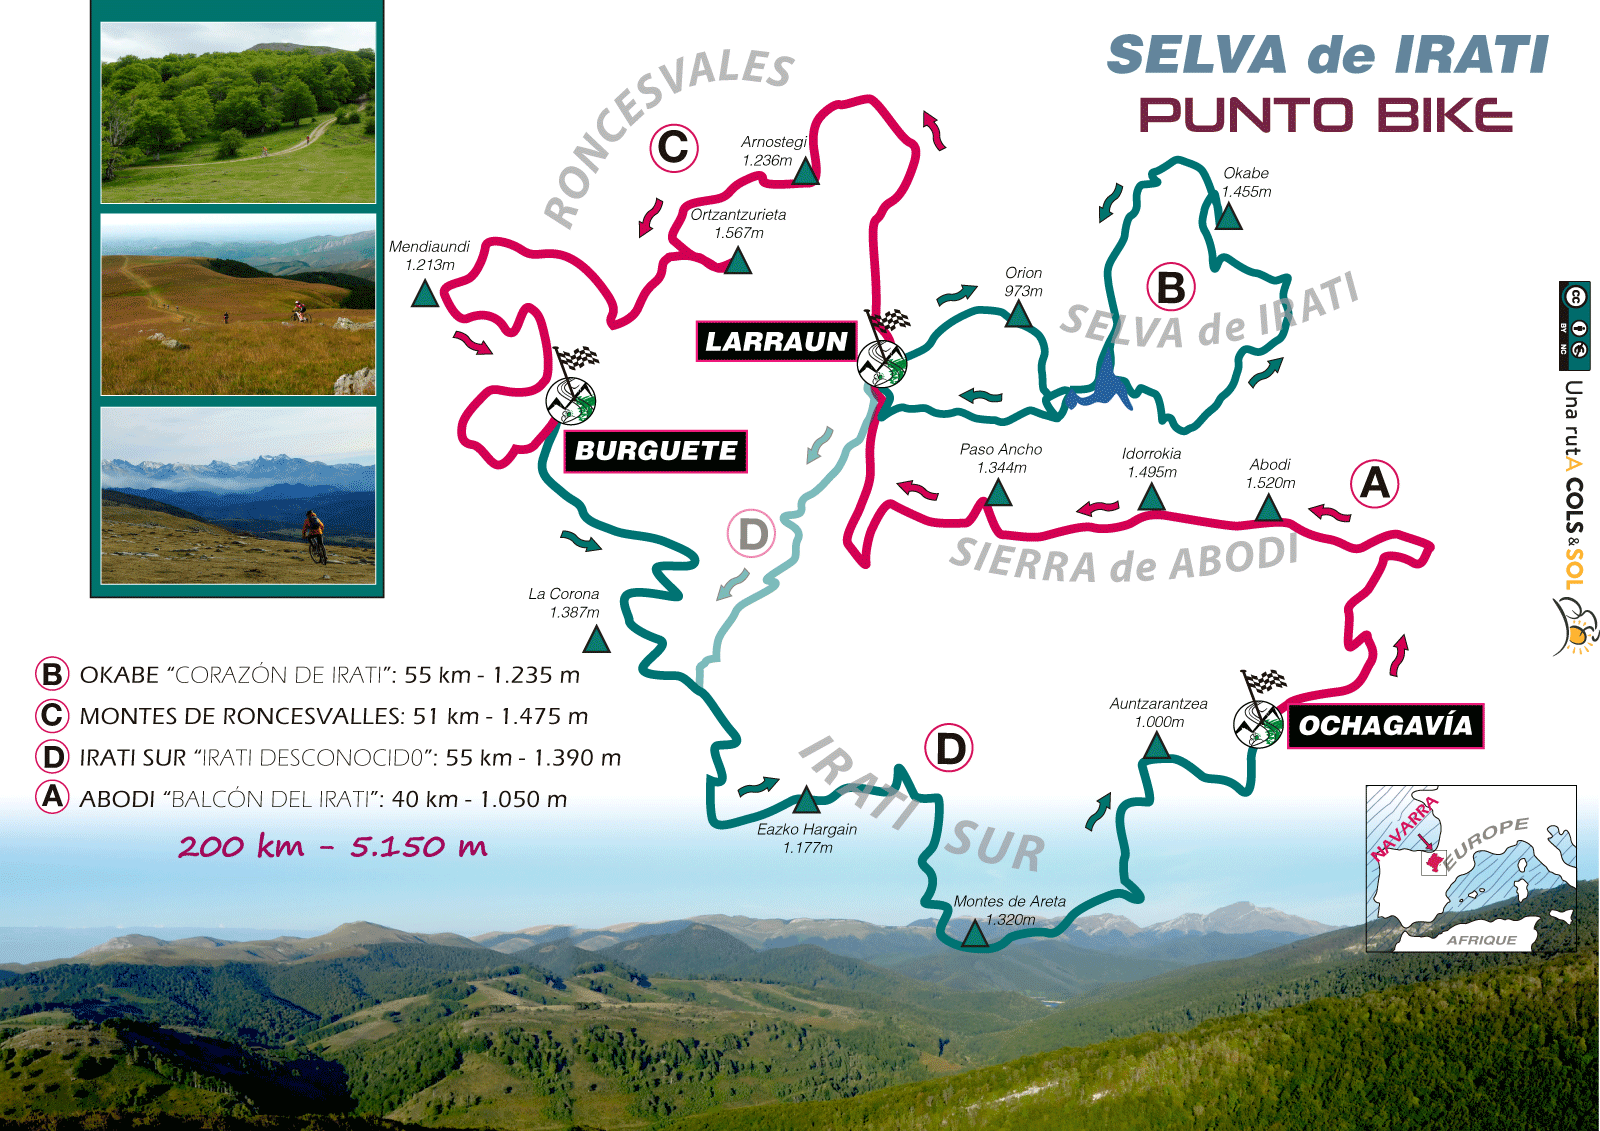 Mapa-Selva-de-Irati-BTT-Pirineos-PUNTO-BIKE